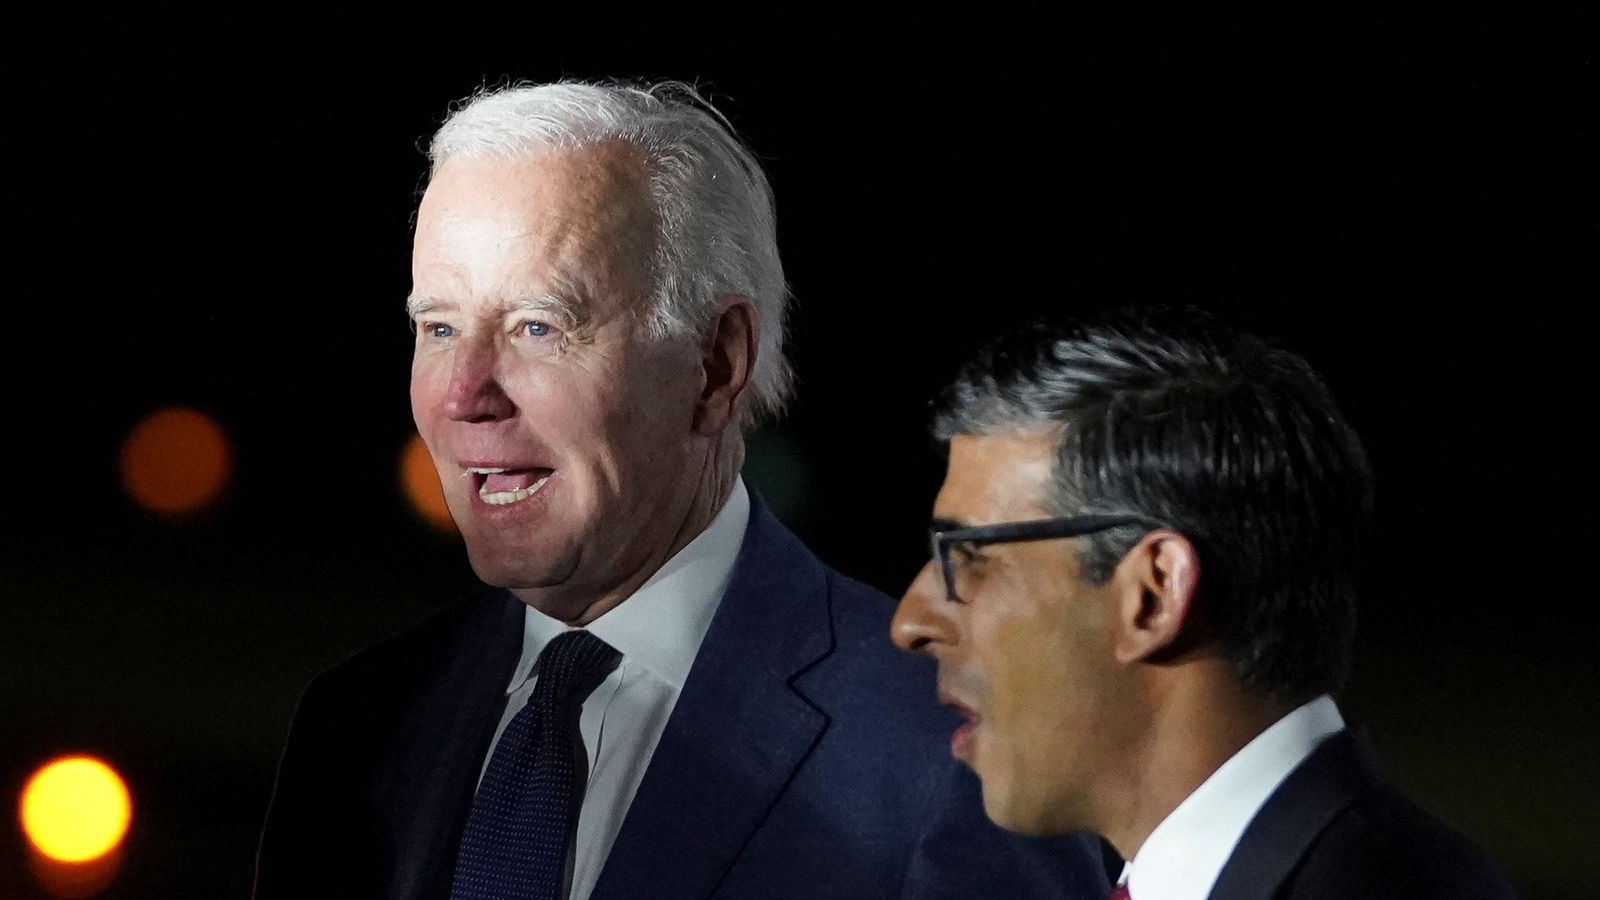 Joe Biden greets Rishi Sunak in Northern Ireland on Good Friday Agreement's historic 25th anniversary